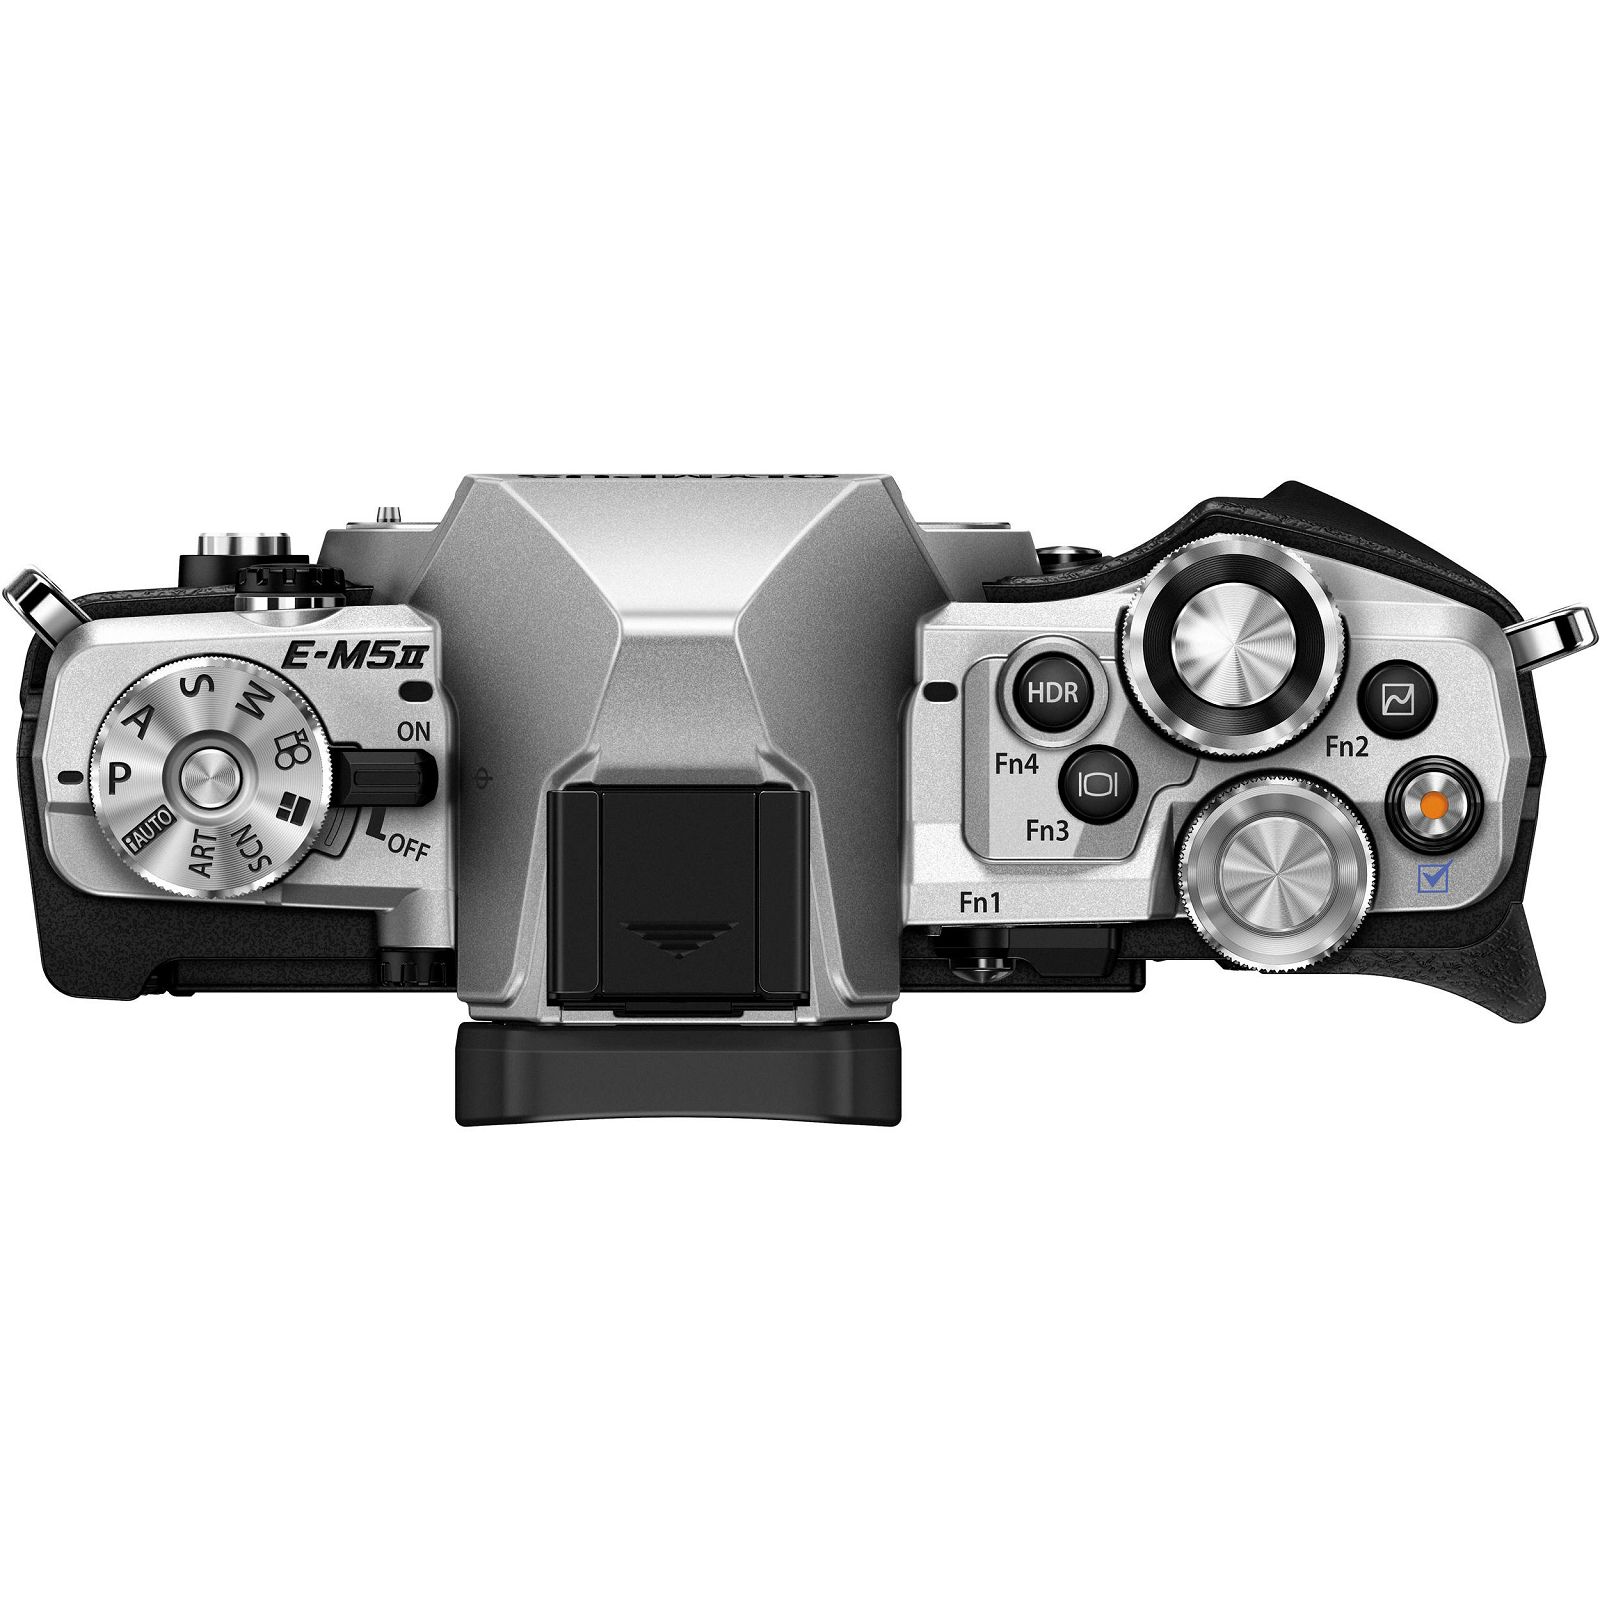 Olympus E-M5 II Body Silver srebreni OM-D digitalni fotoaparat E-M5II Camera incl. Charger & Battery Micro Four Thirds MFT V207040SE000